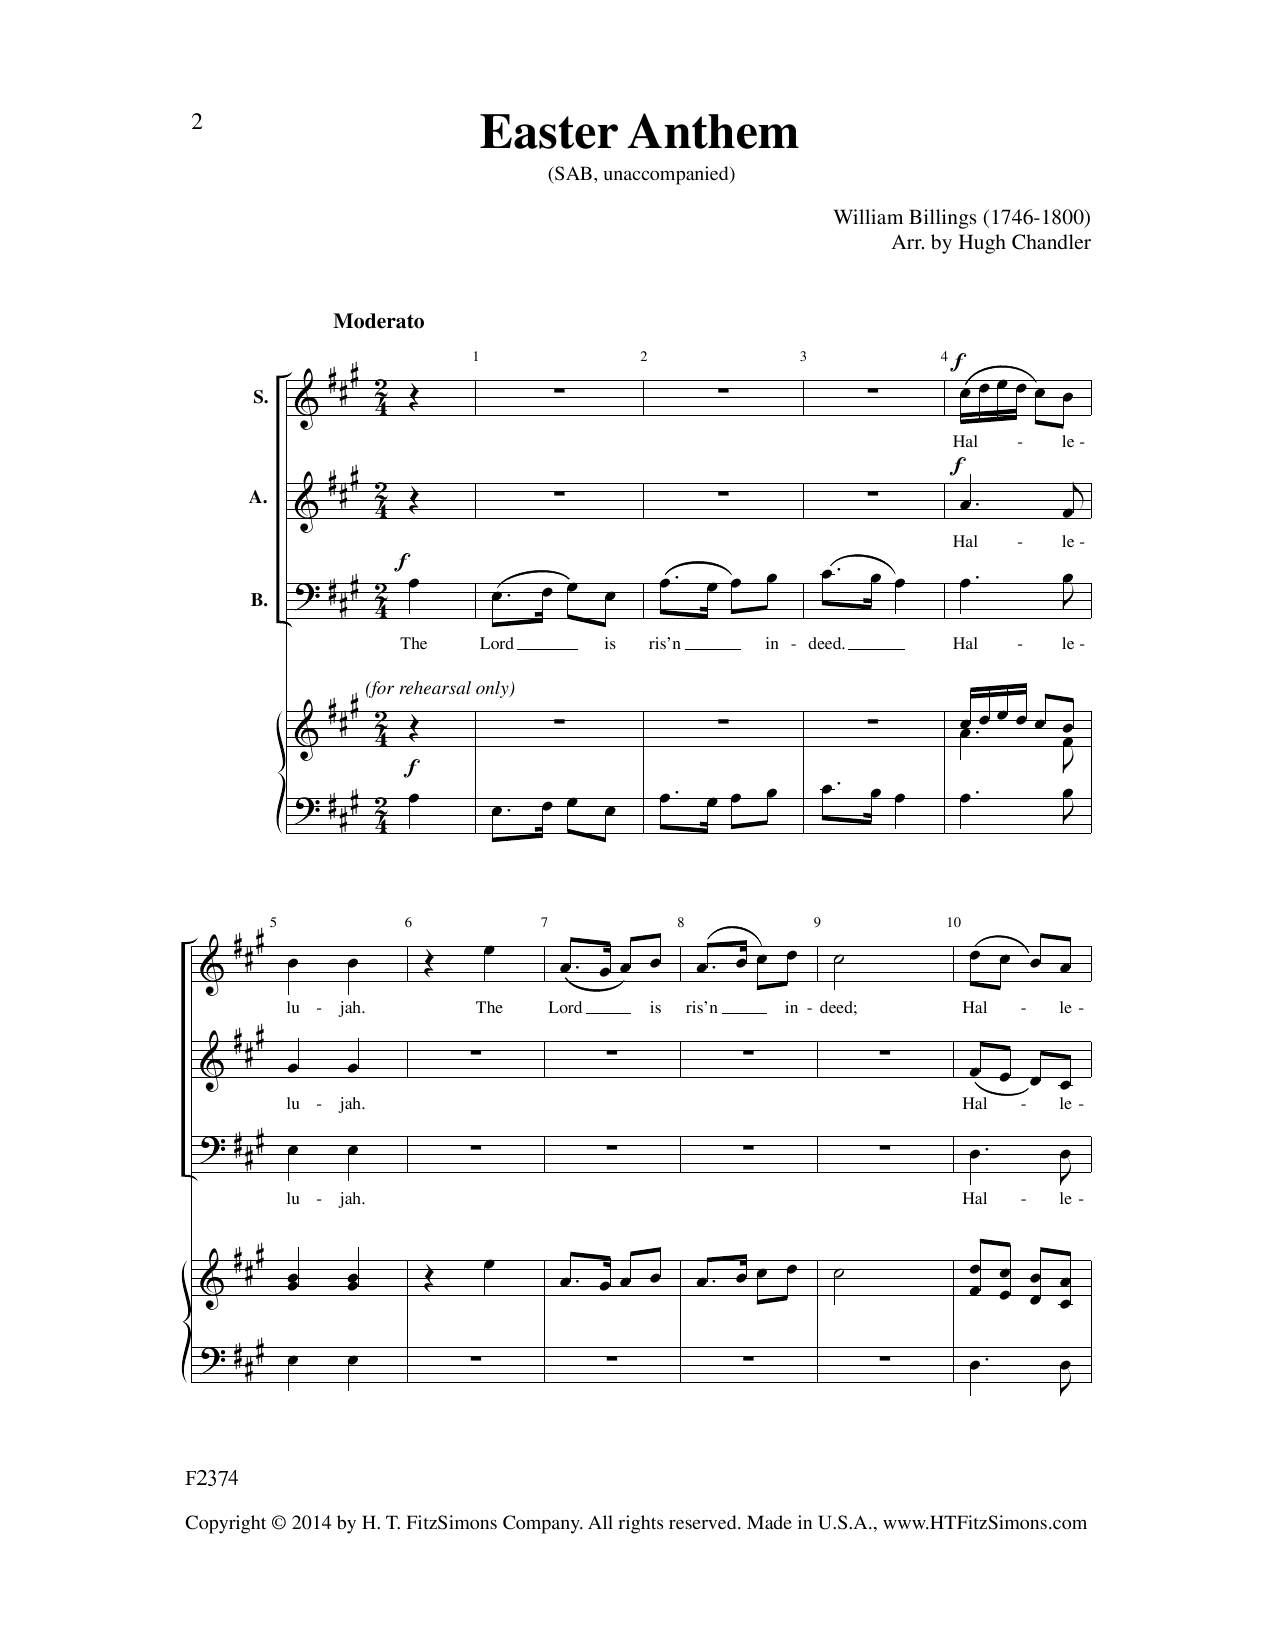 William Billings Easter Anthem (arr. Hugh Chandler) sheet music notes and chords arranged for SAB Choir